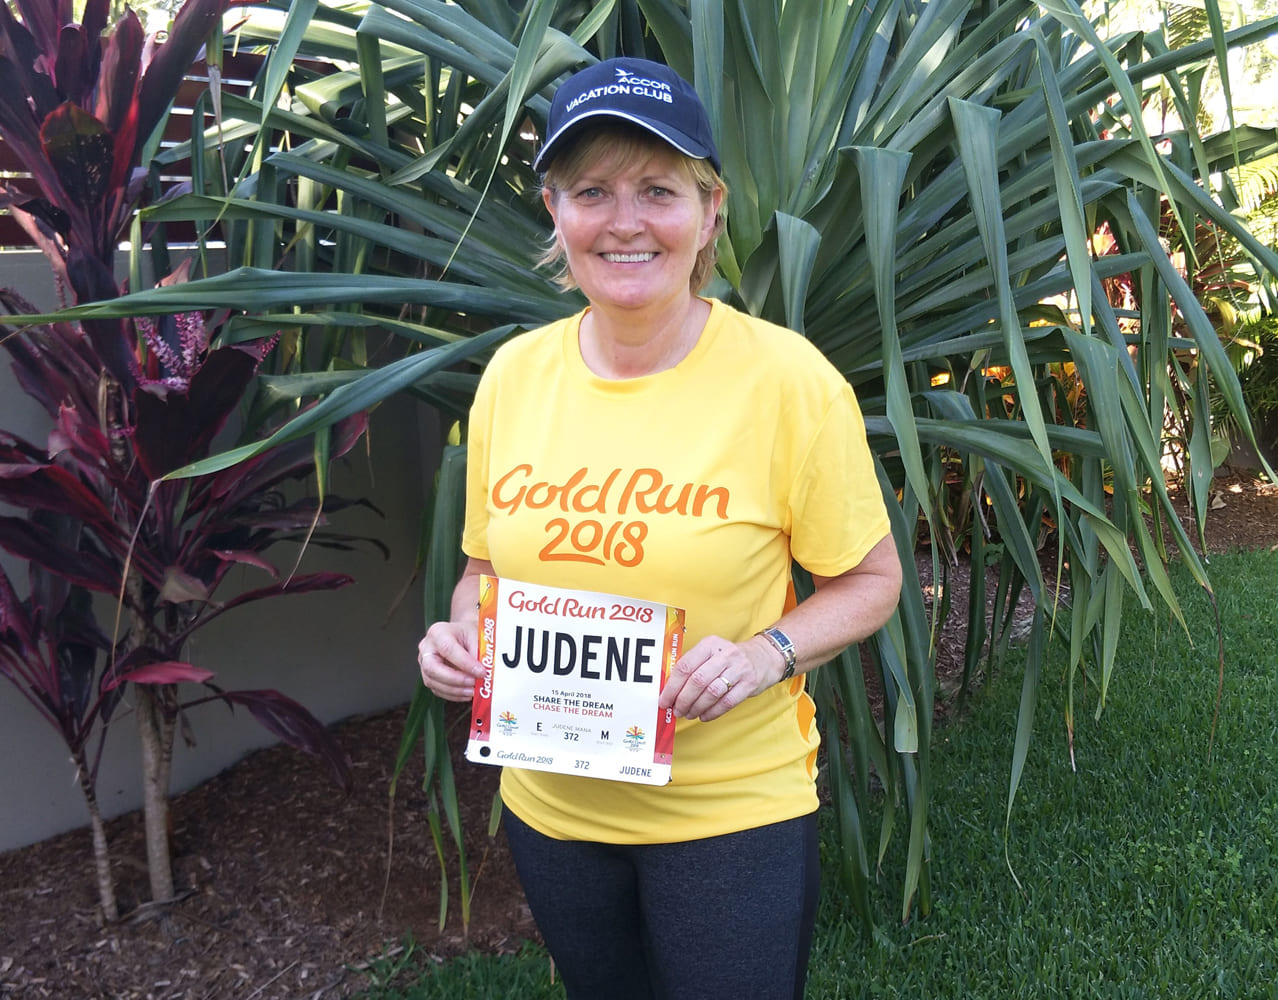 GC2018 Gold Run glory for Judene